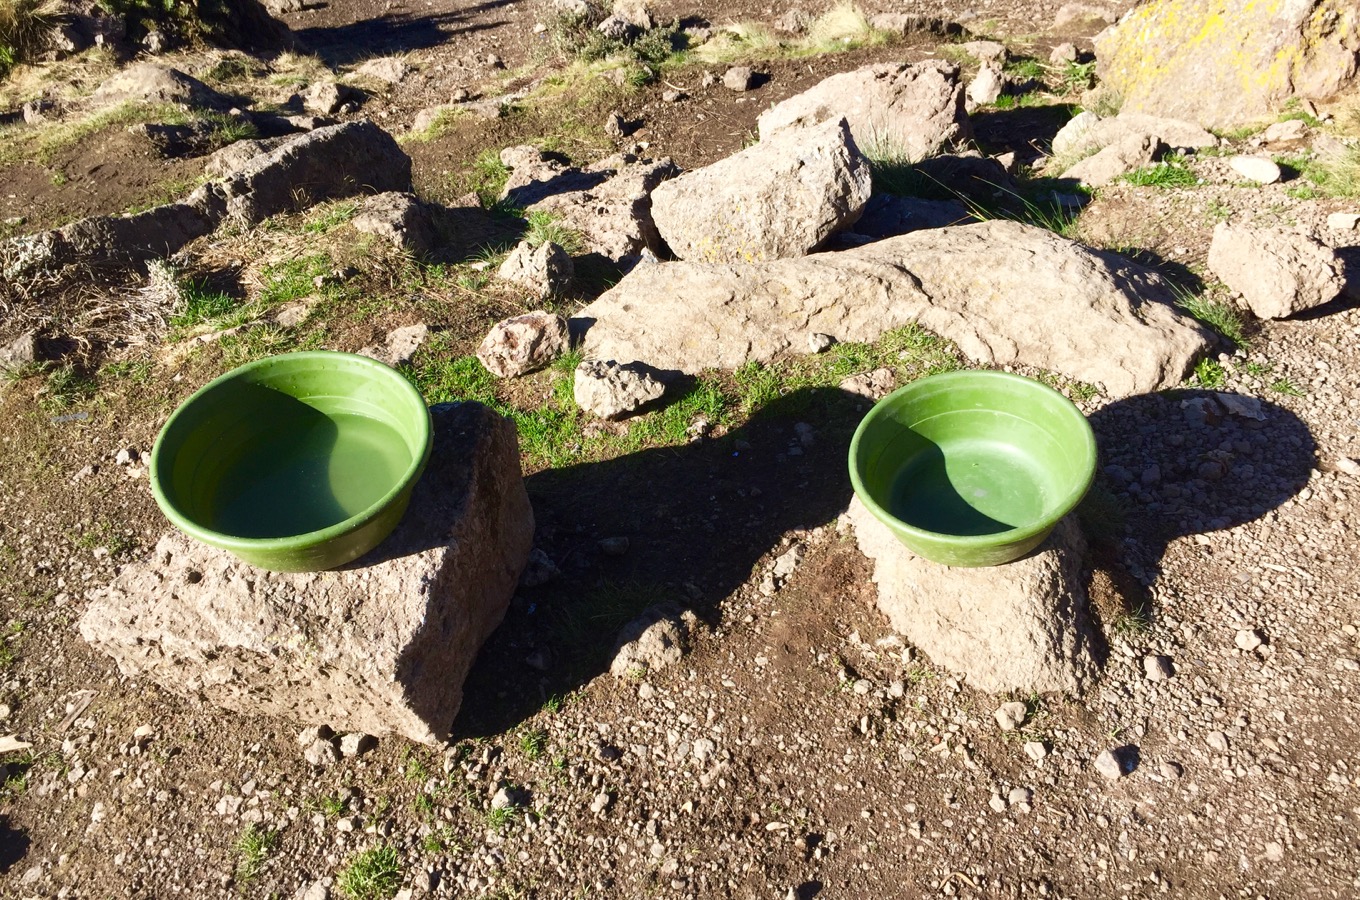 Bowls for washing during climb of Mount Kilimanjaro